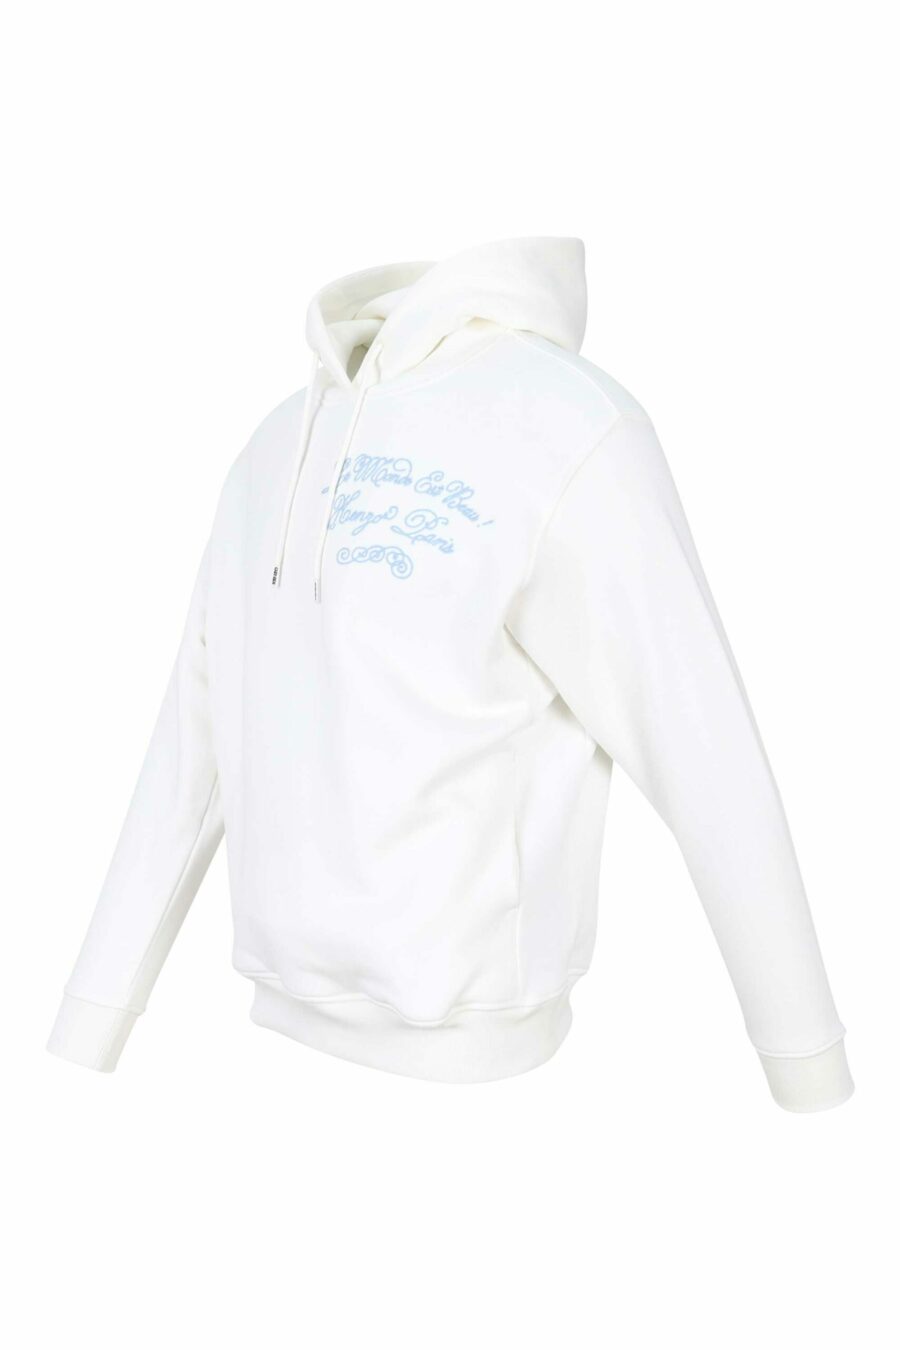 Weißes Kapuzensweatshirt mit Mini-Logo "kenzo travel" - 3612230515765 1 1 skaliert